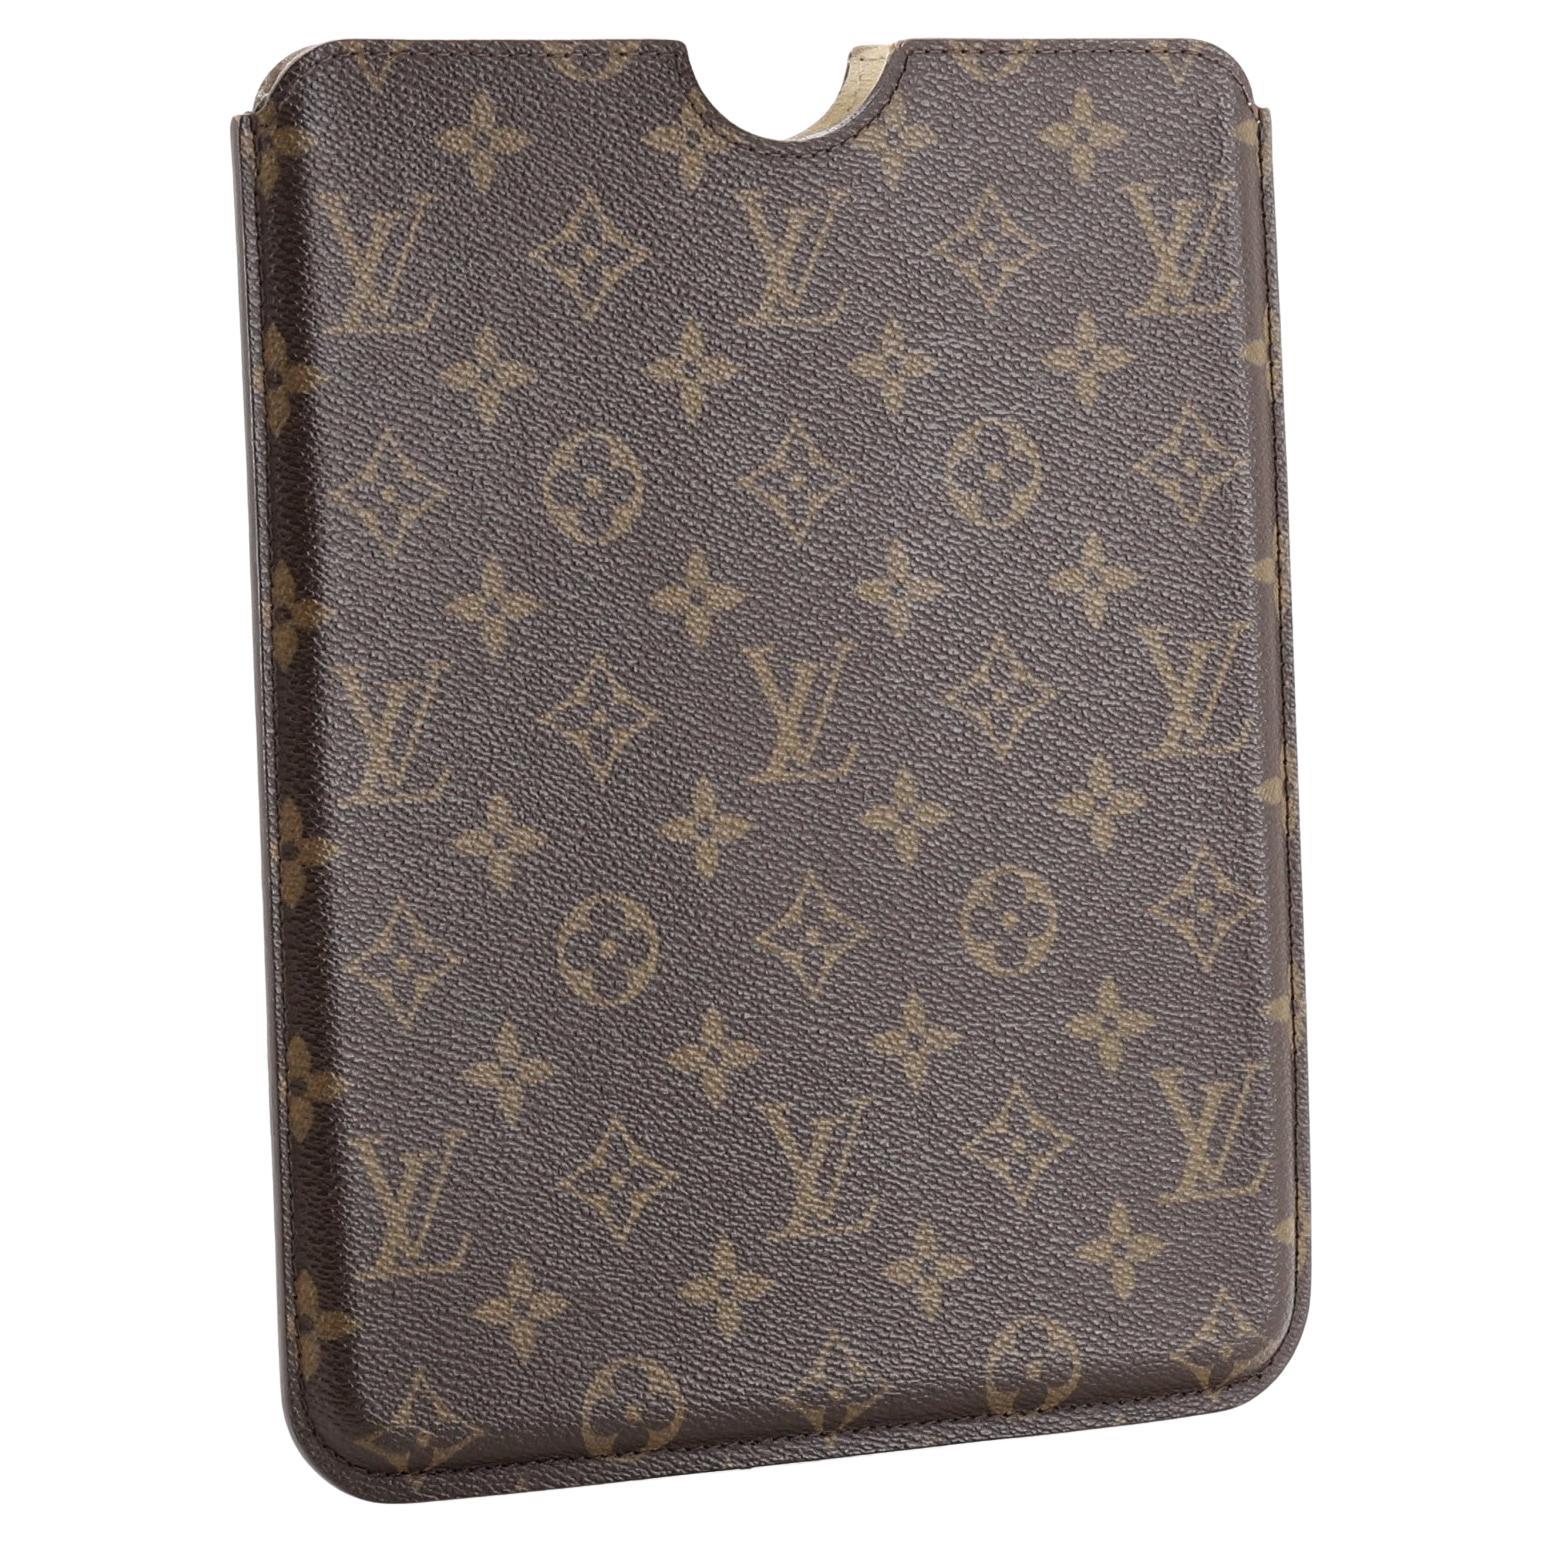 Louis Vuitton iPad Cases